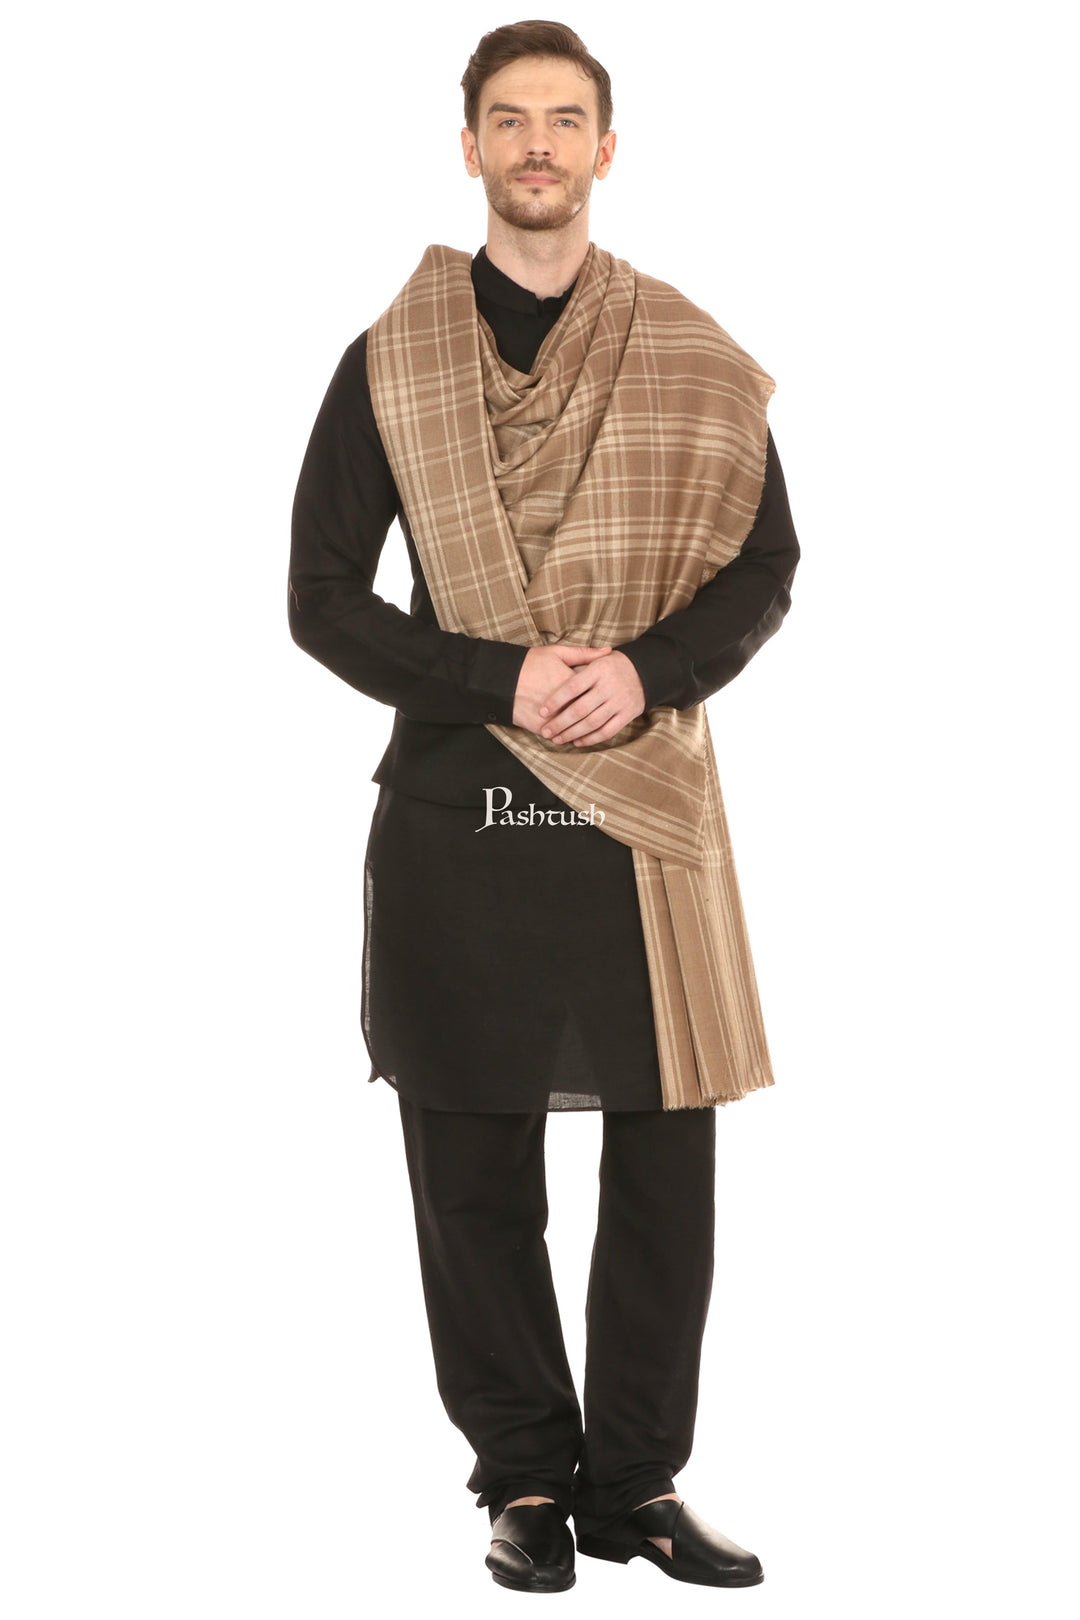 Pashtush India Mens Shawls Gents Shawl Pashtush Mens Fine Wool Checkered Shawl, Extra Soft And Warm - Beige